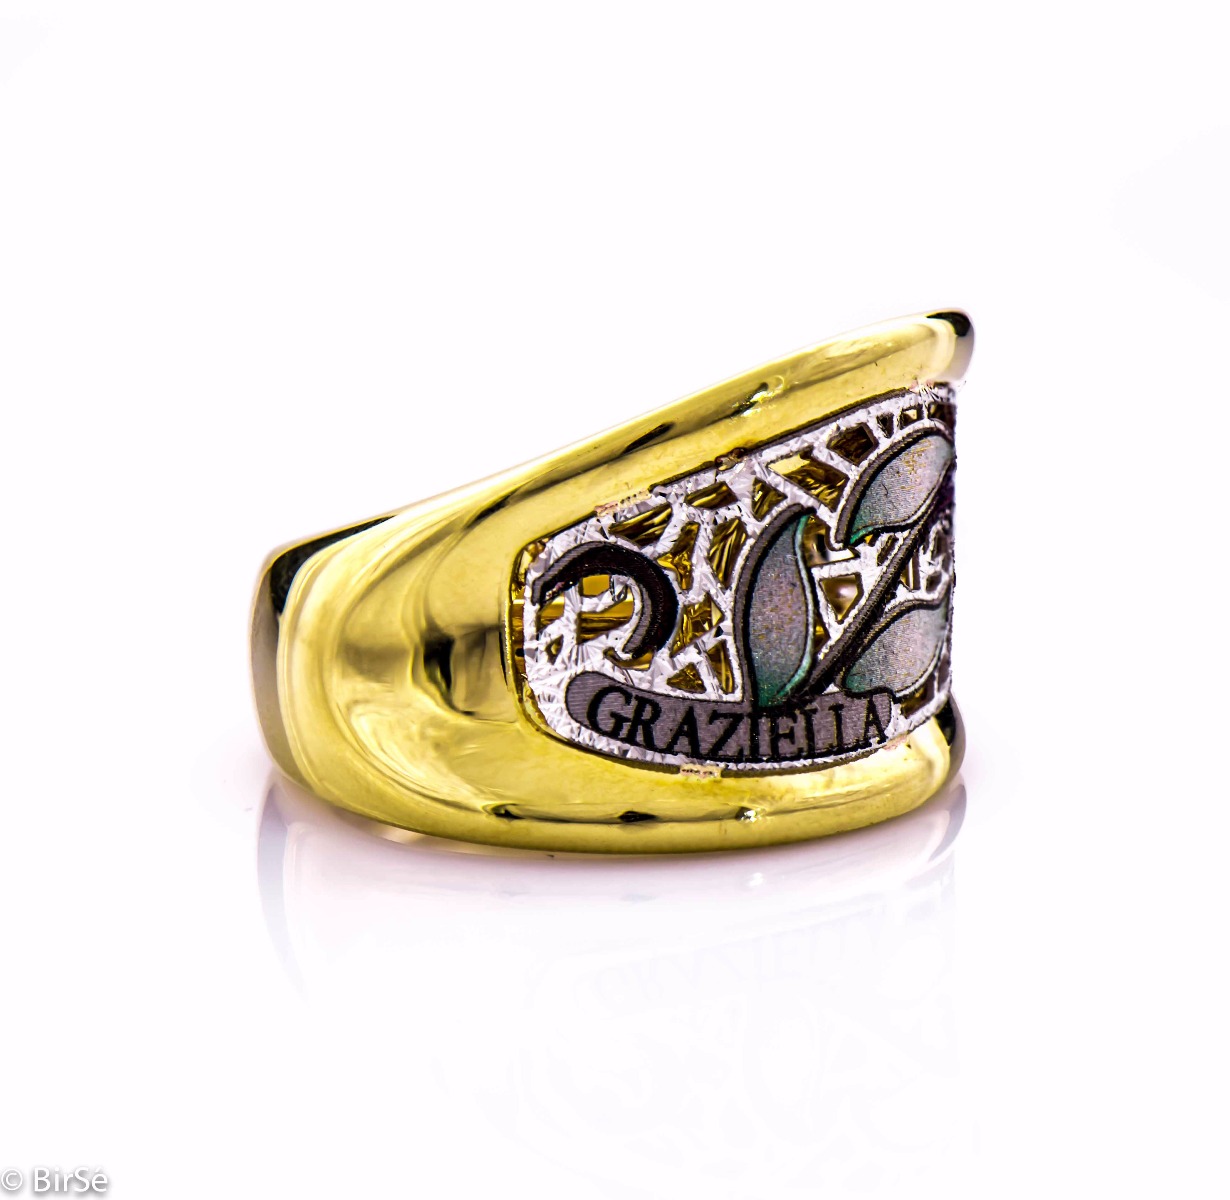 Златен пръстен - Graziella